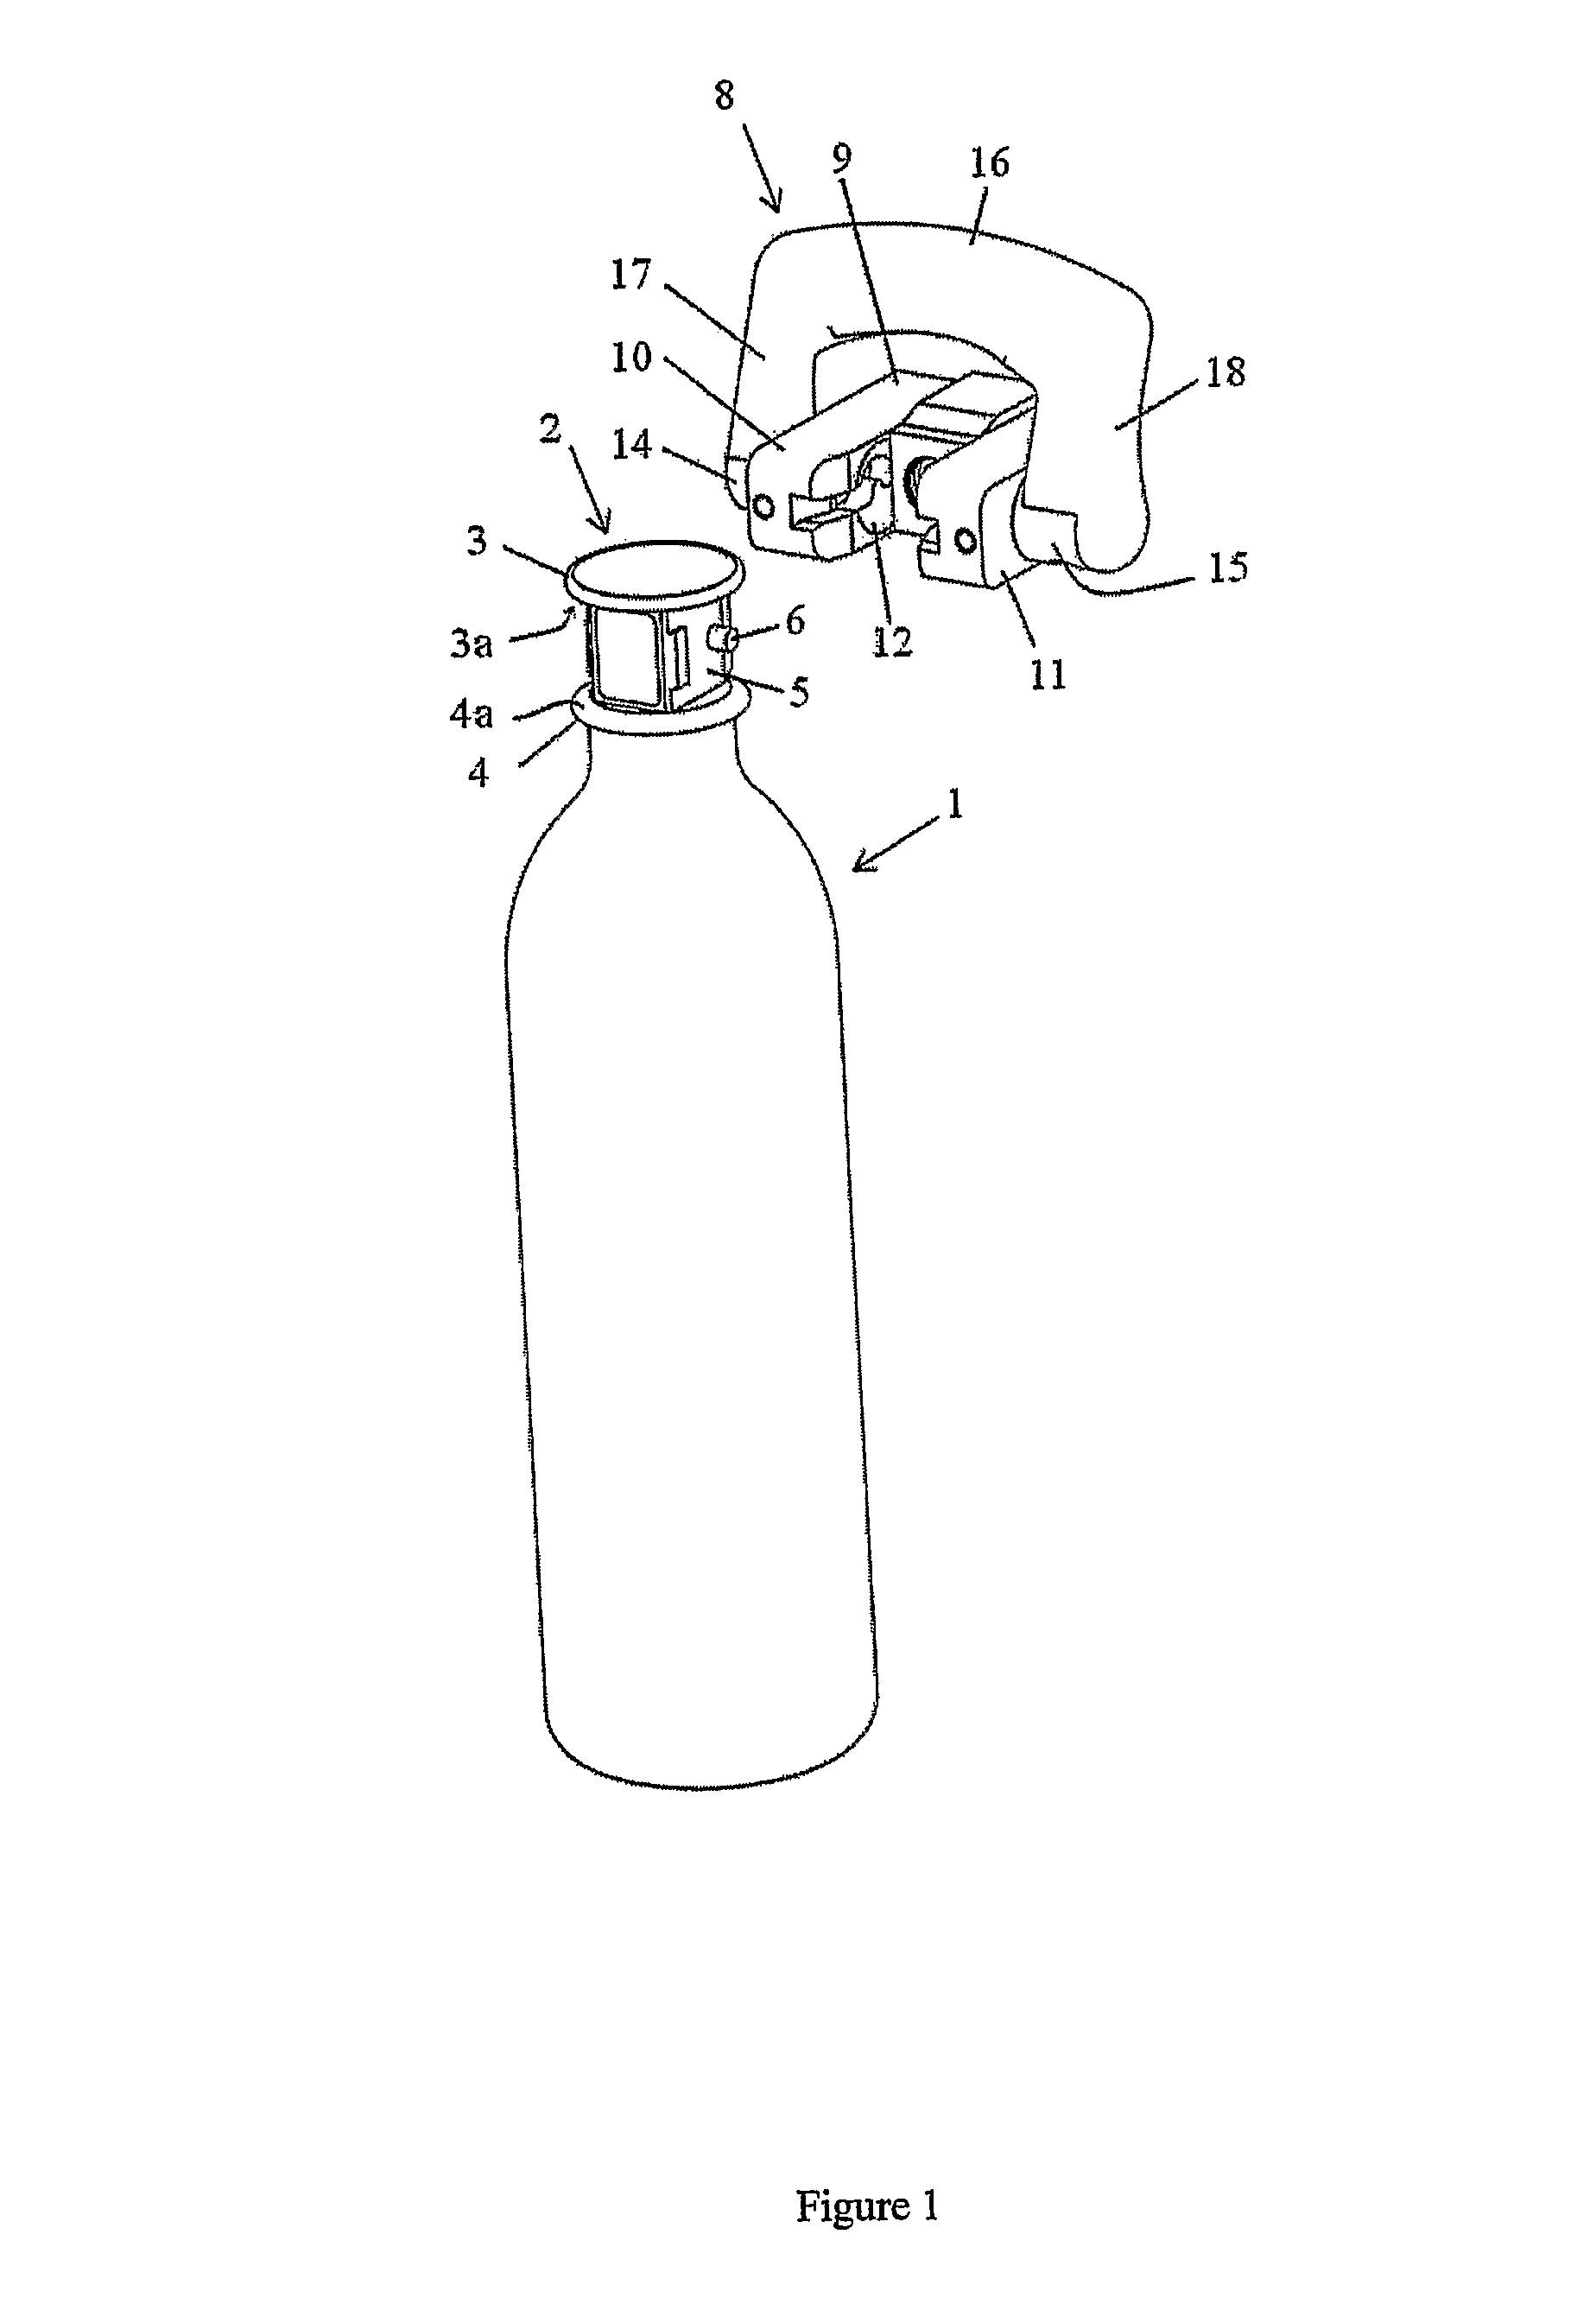 Tamper-resistant valve and connection arrangement